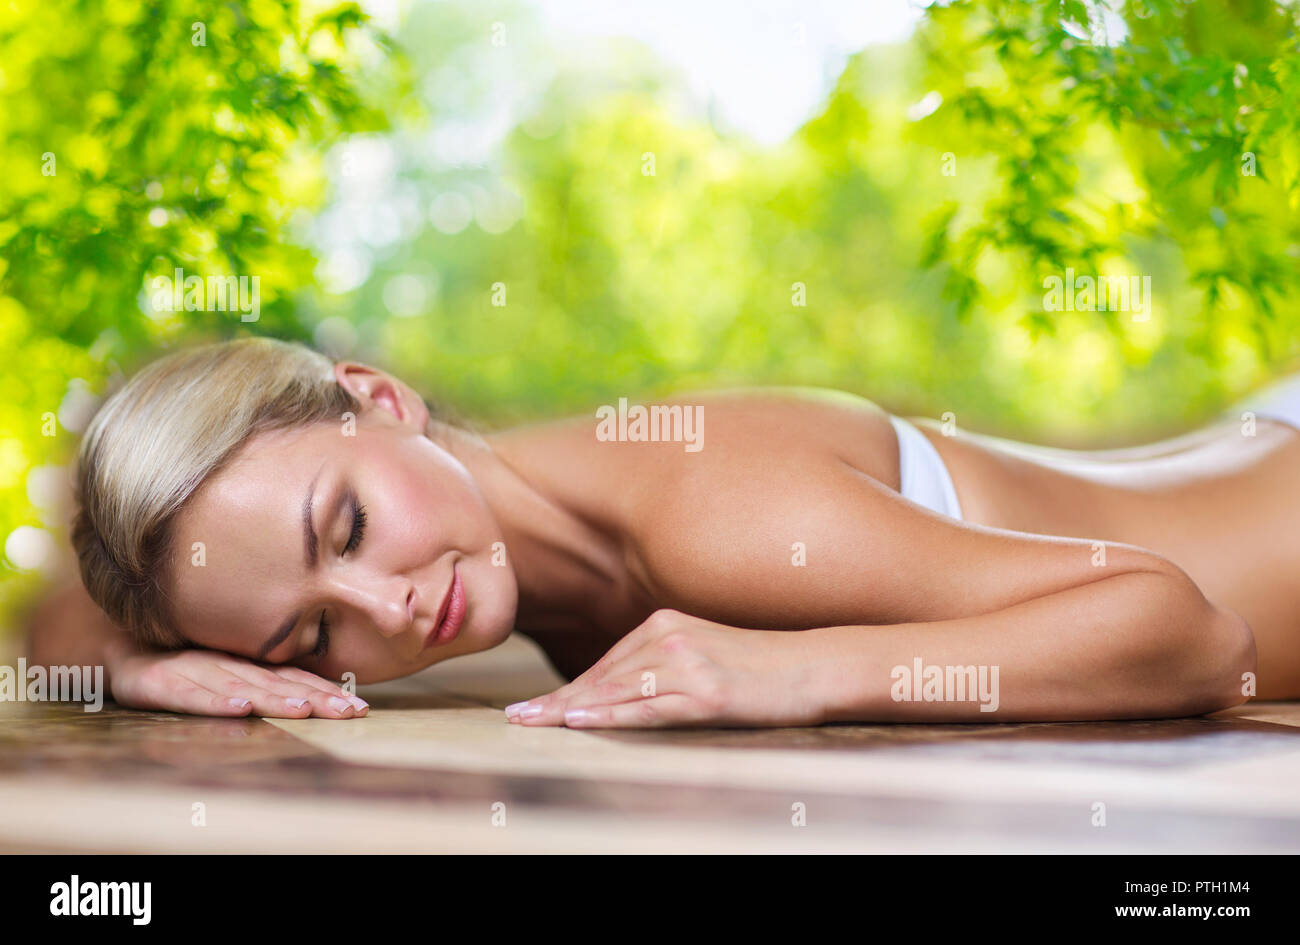 Young woman lying on hammam table dans un bain turc Banque D'Images